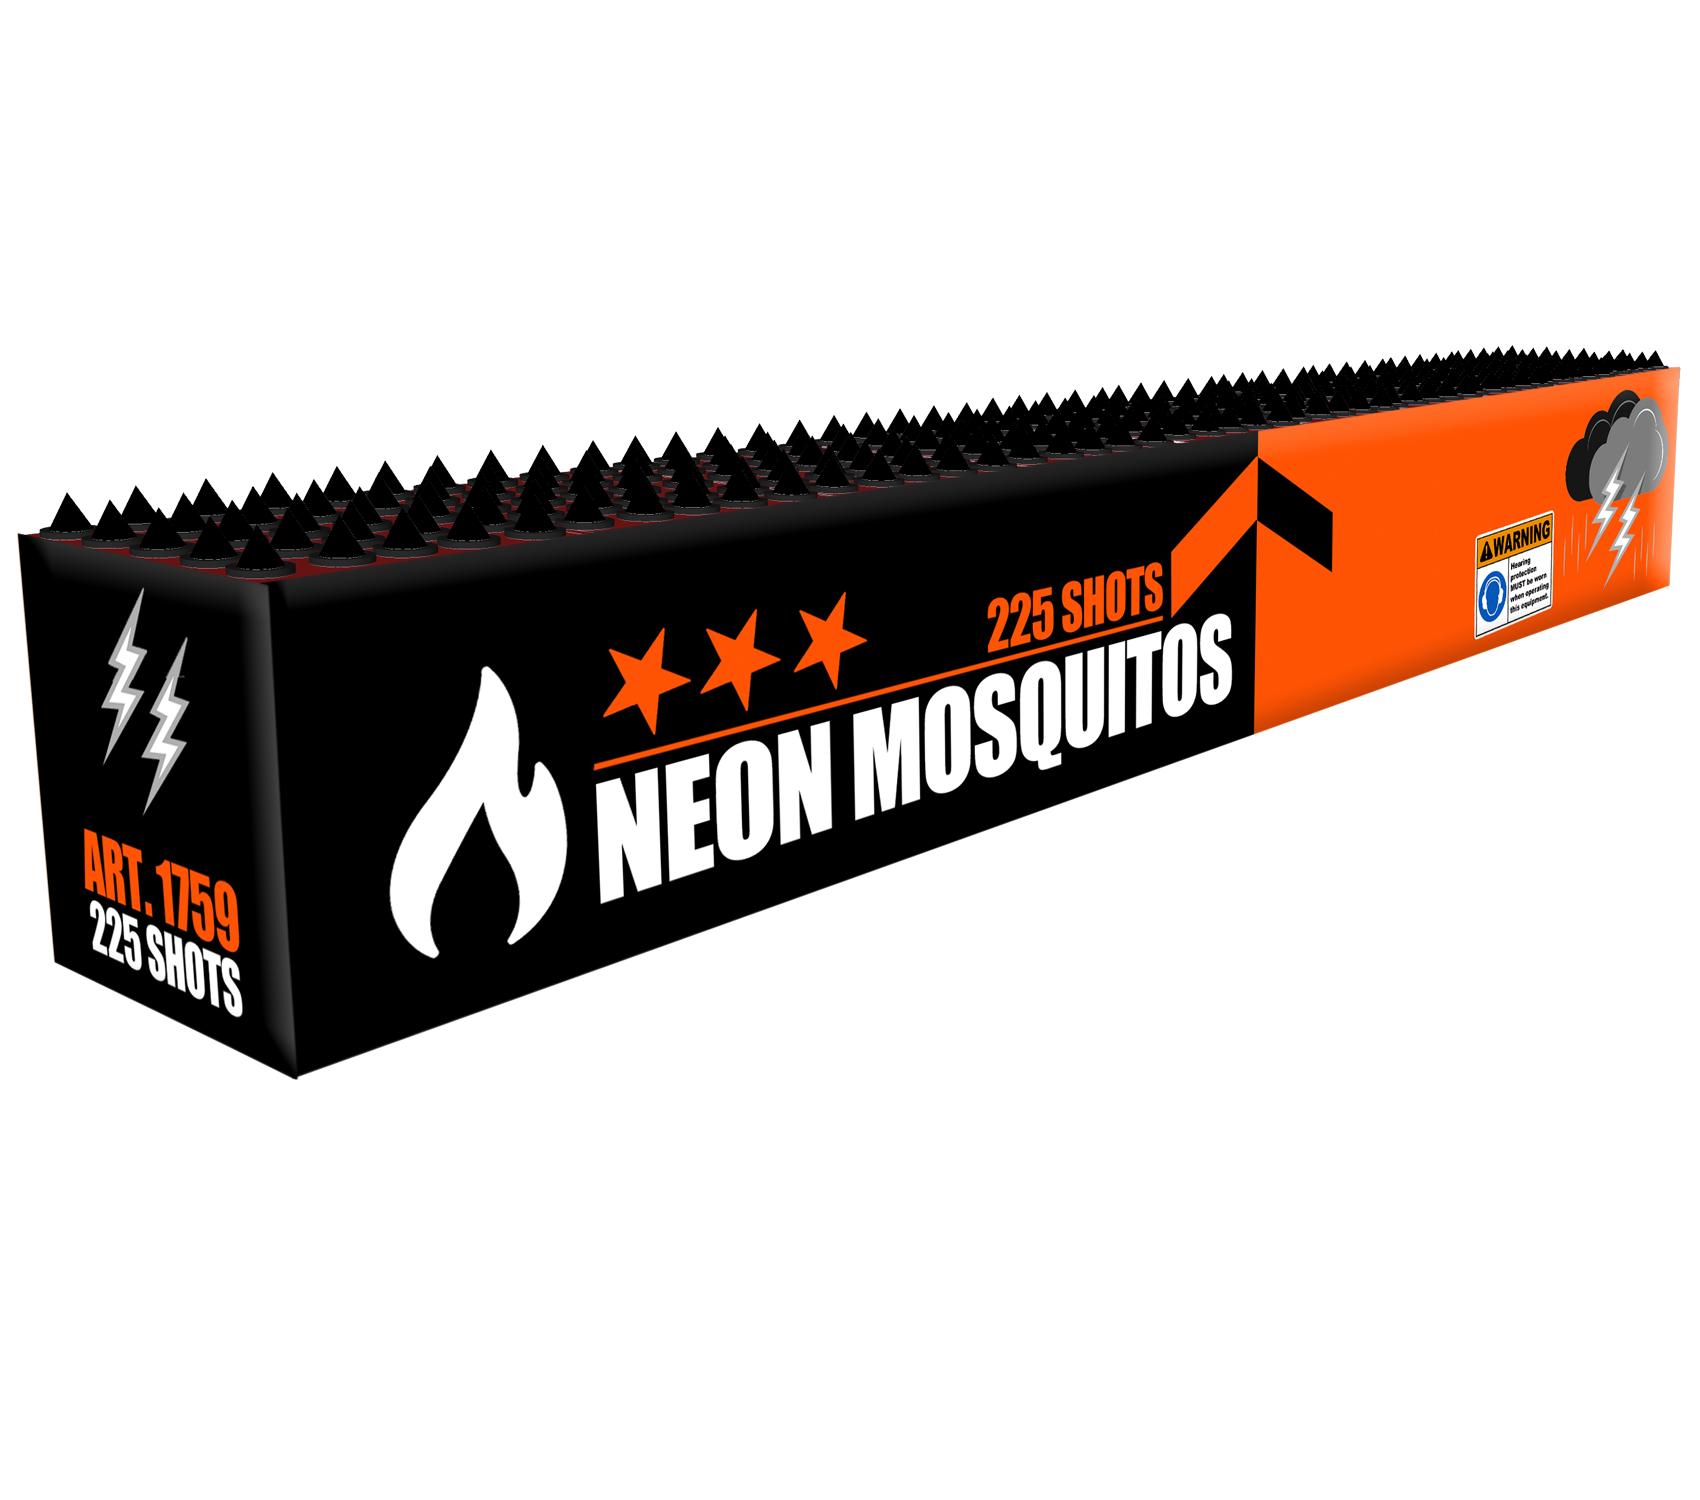 Neon Mosquitos 225sh